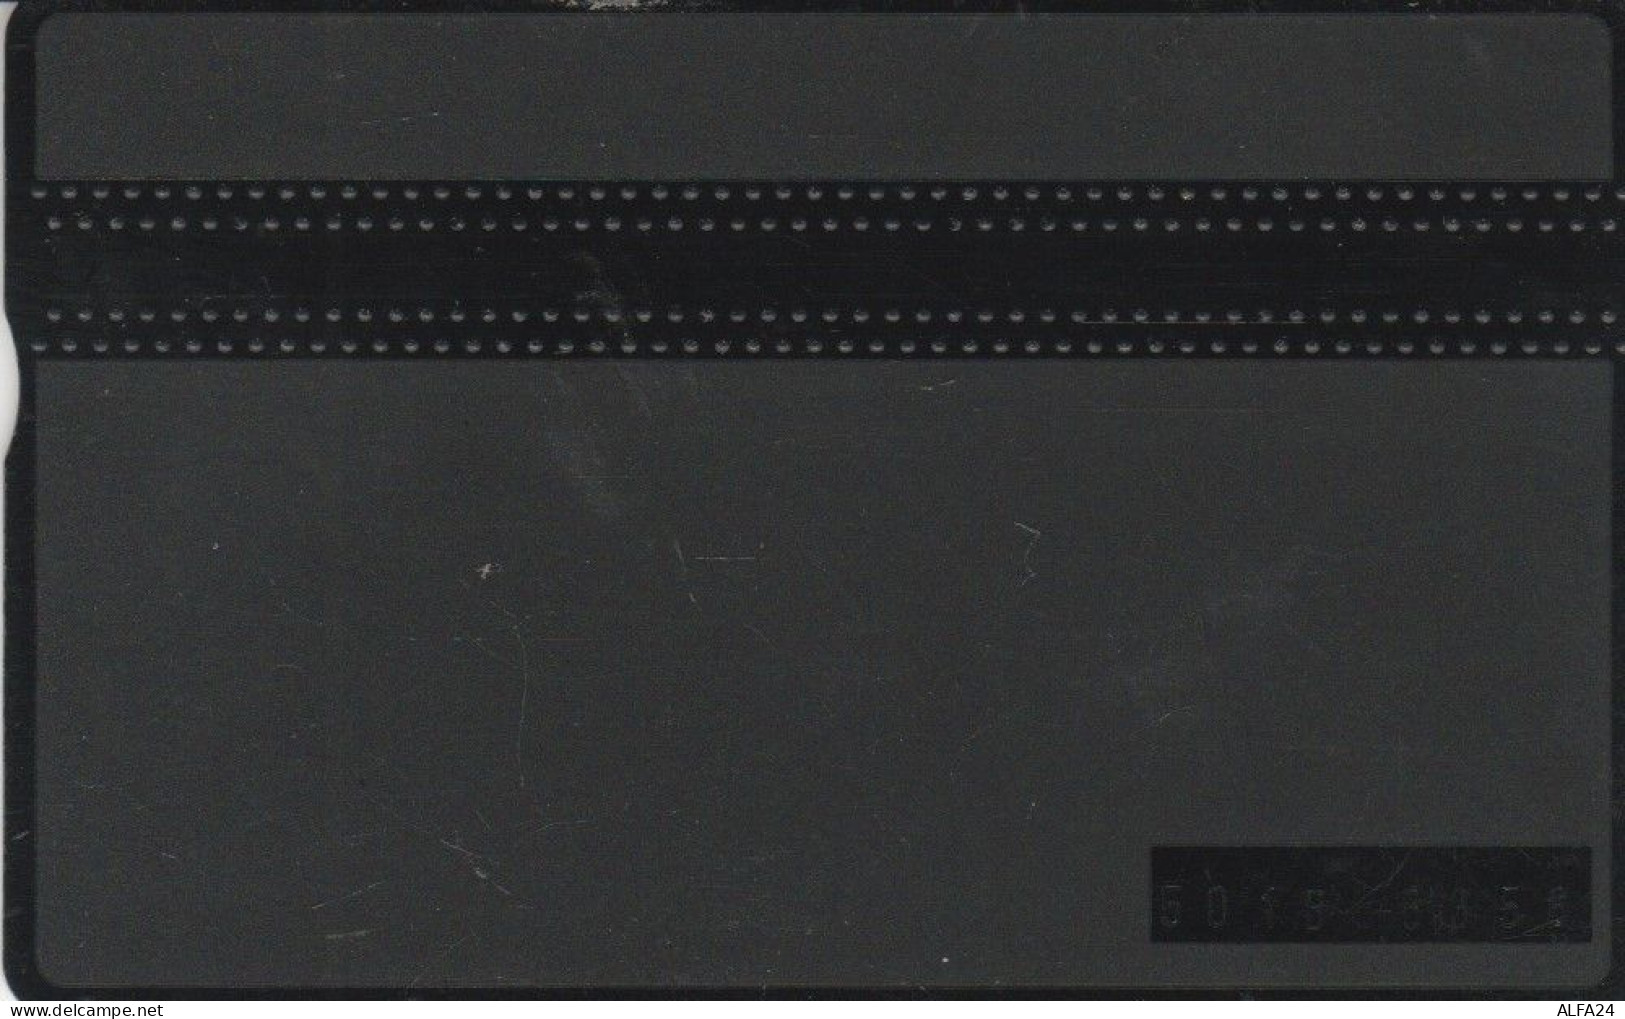 PHONE CARD BELGIO LANDIS (CK6026 - Senza Chip